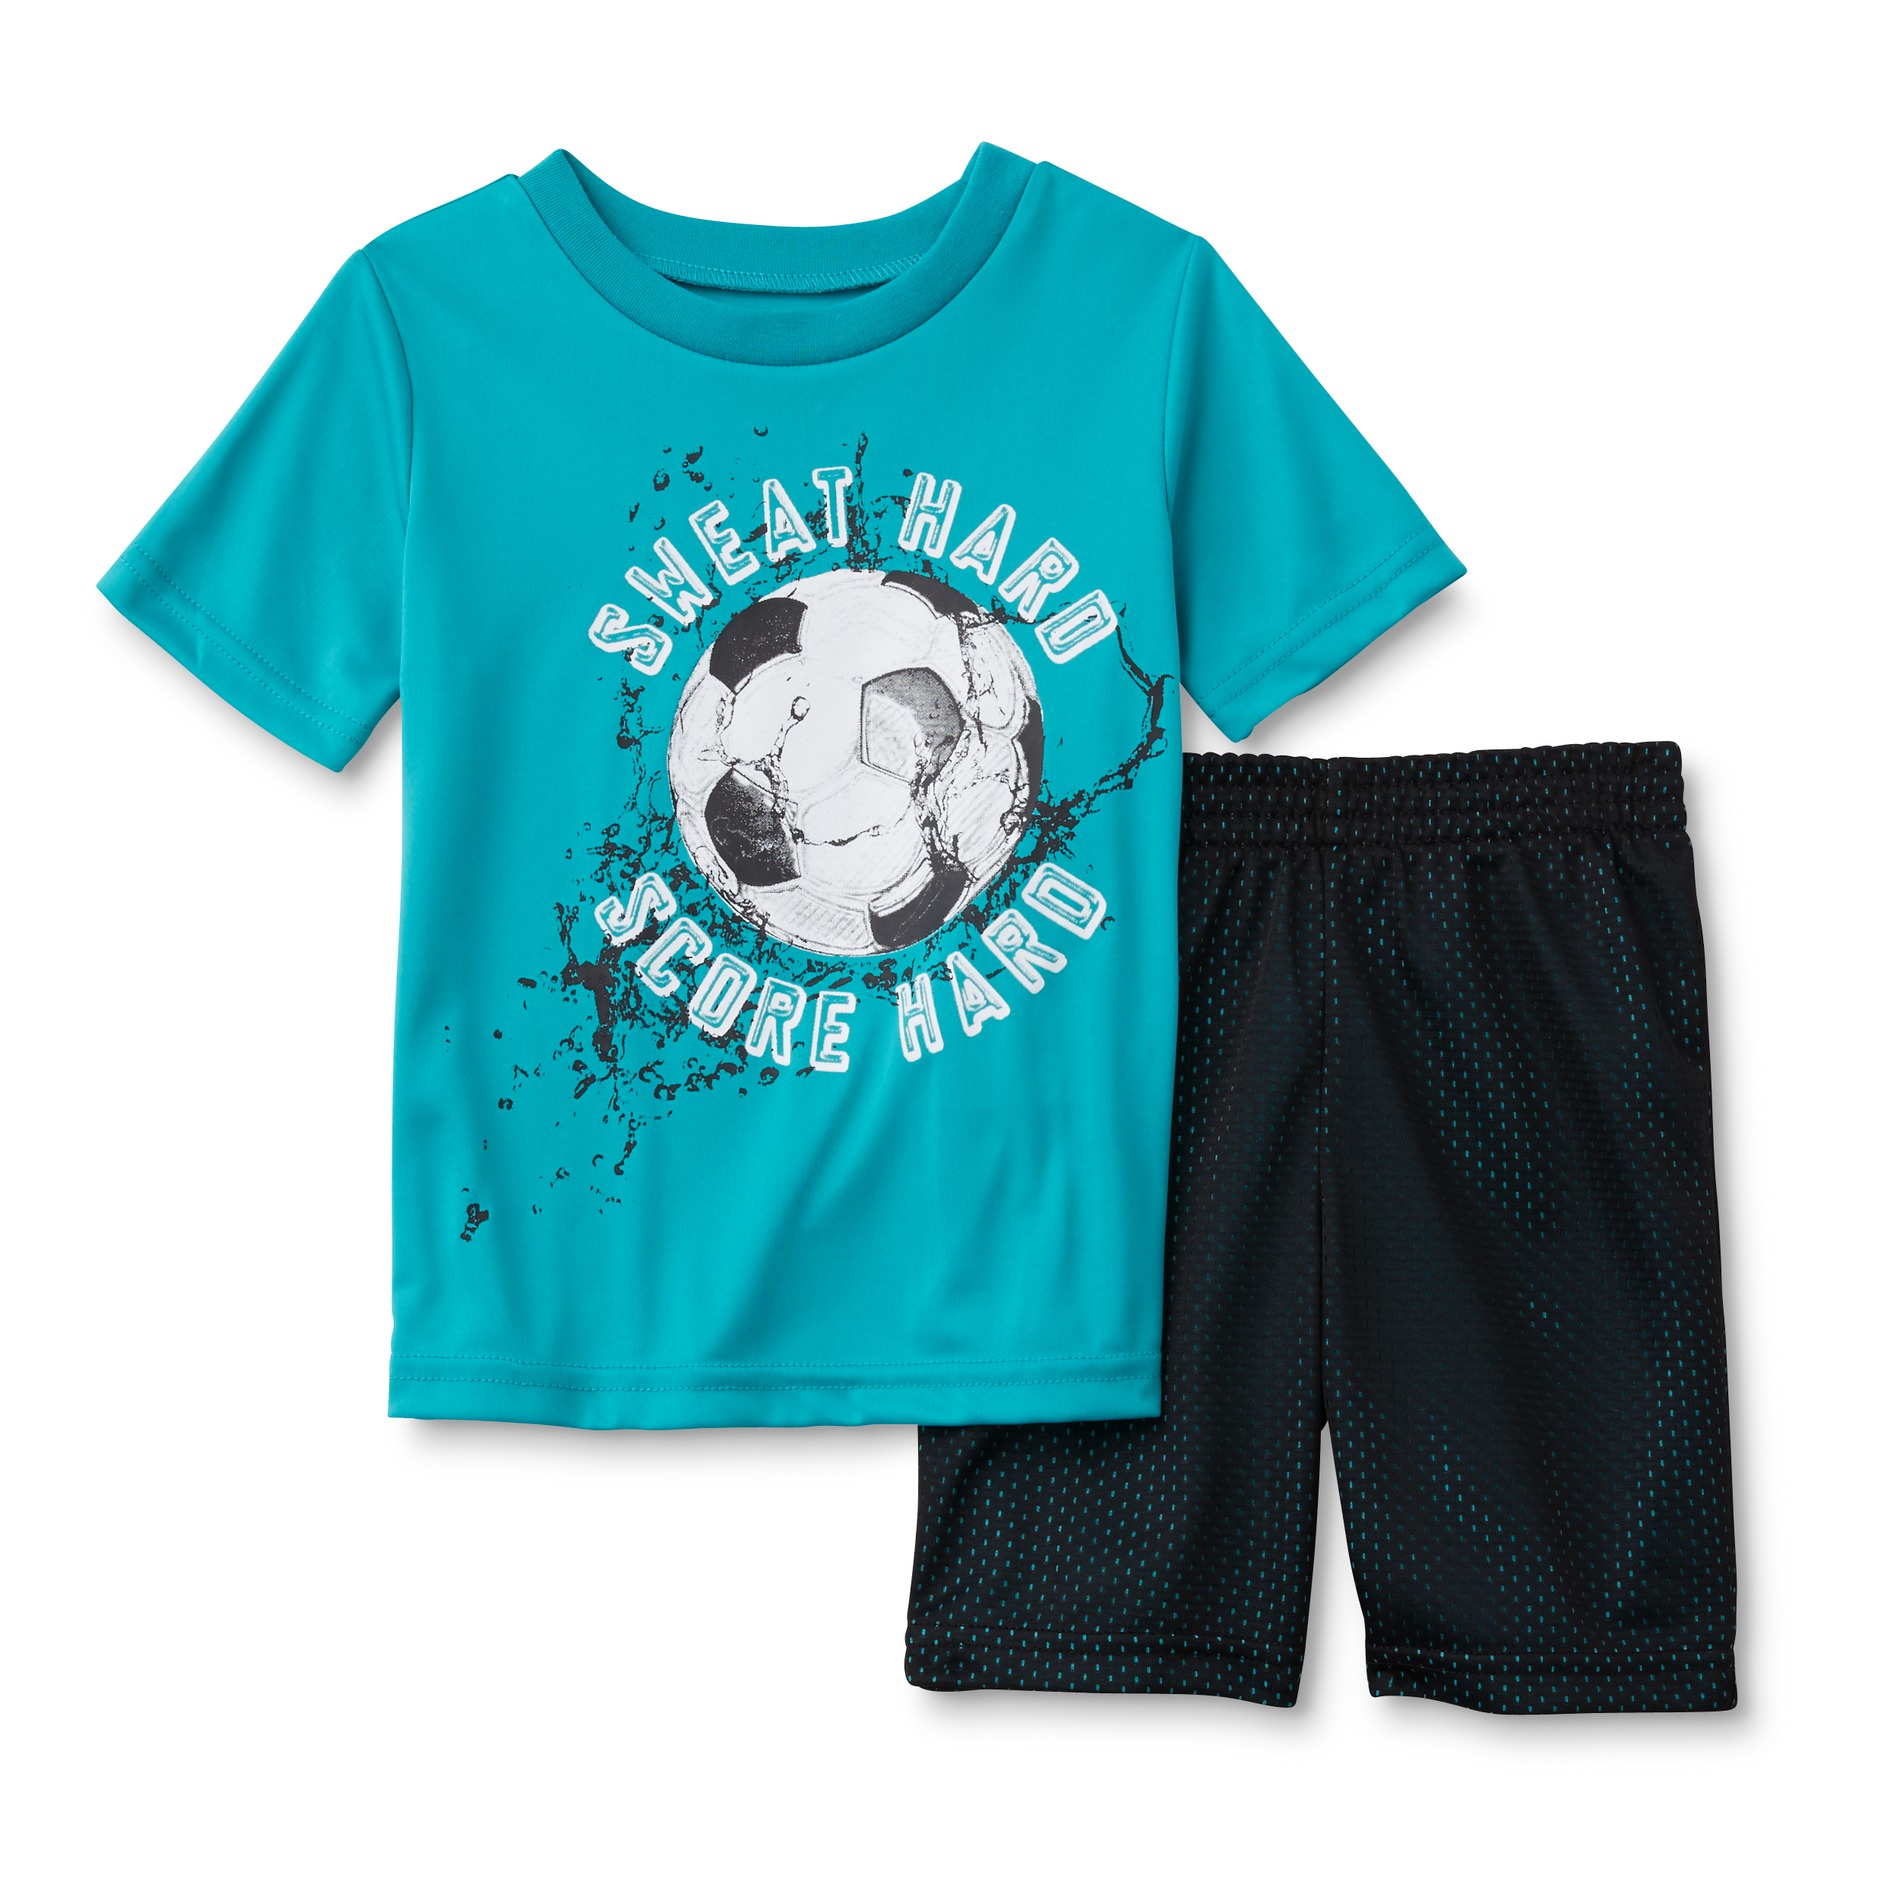 Toughskins Infant & Toddler Boys' Athletic T-Shirt & Shorts - Sweat Hard